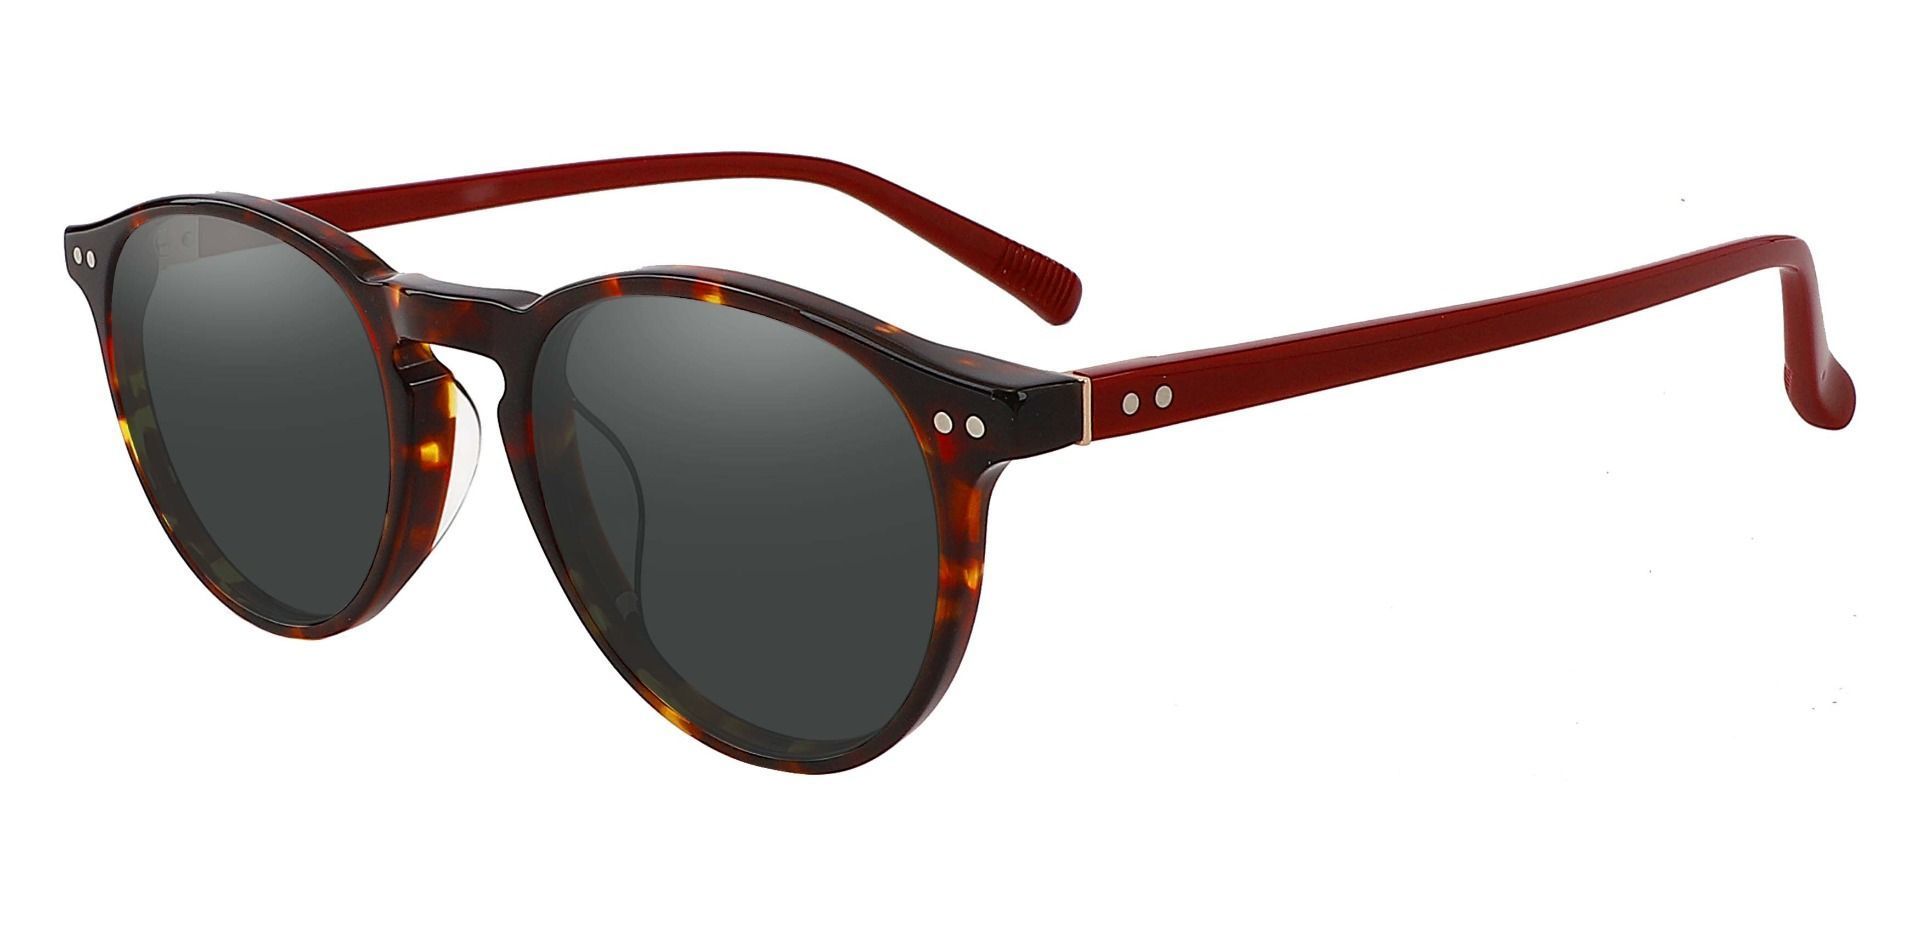 Monarch Oval Progressive Sunglasses - Tortoise Frame With Gray Lenses